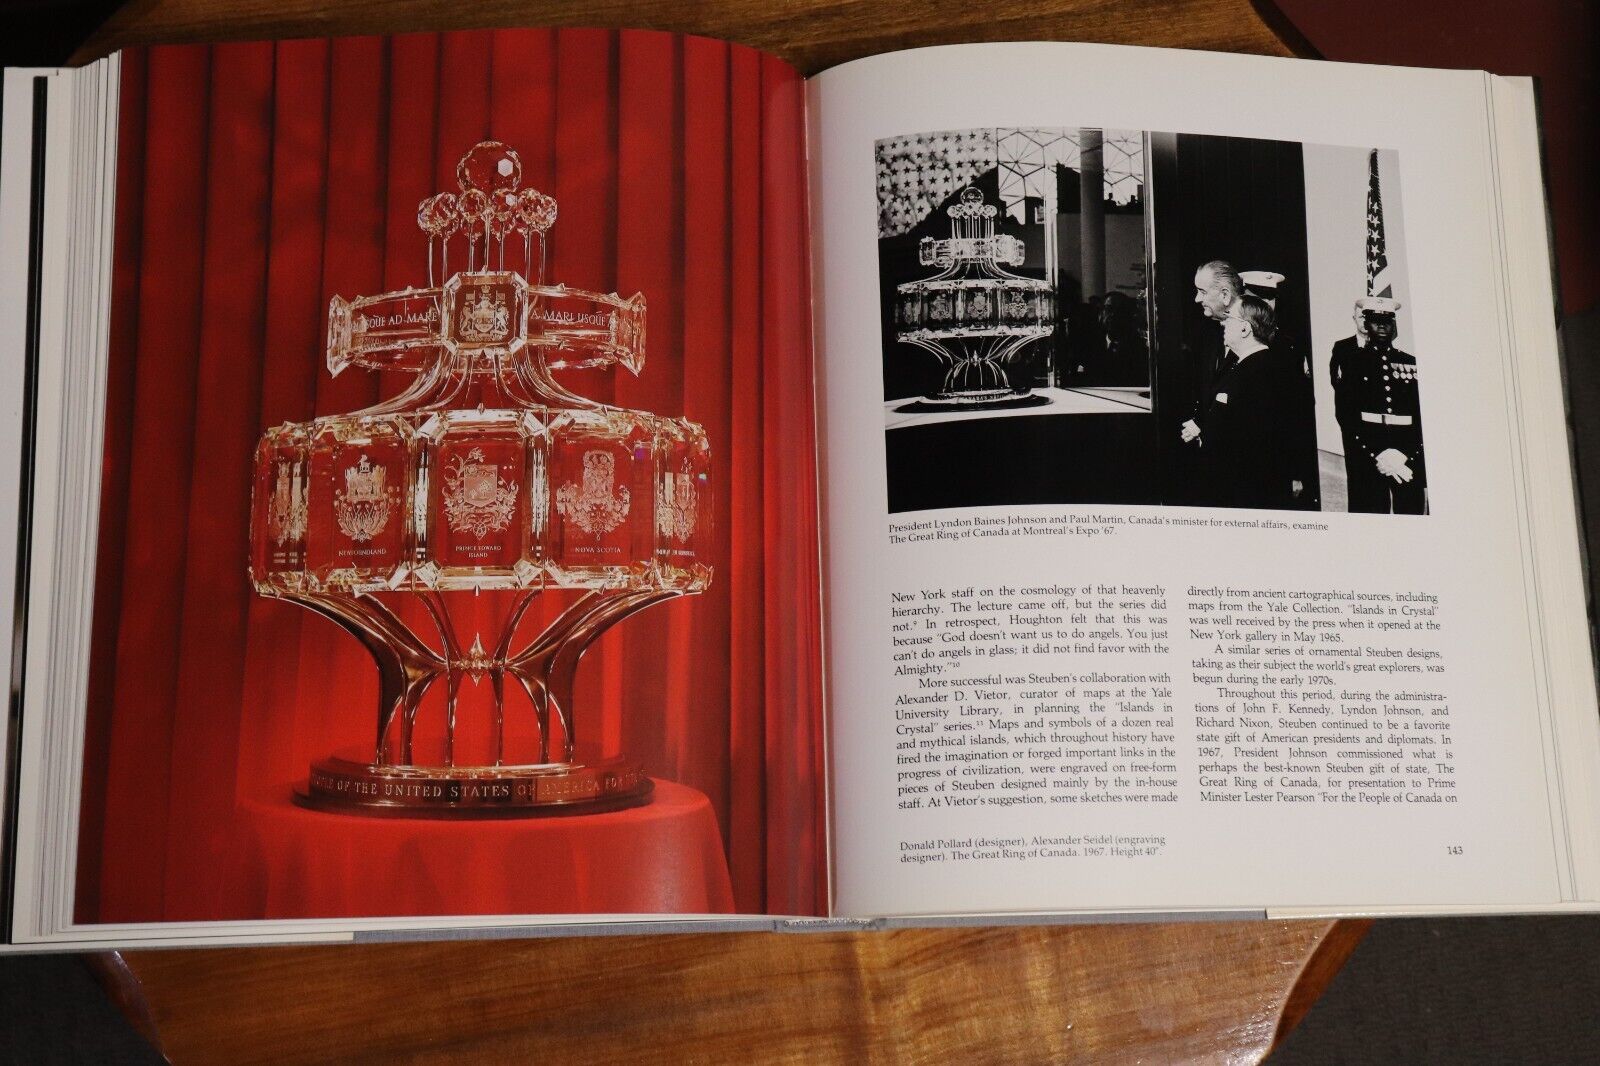 Steuben Glass: Collectors Edition - 1987 - American Crystal Book